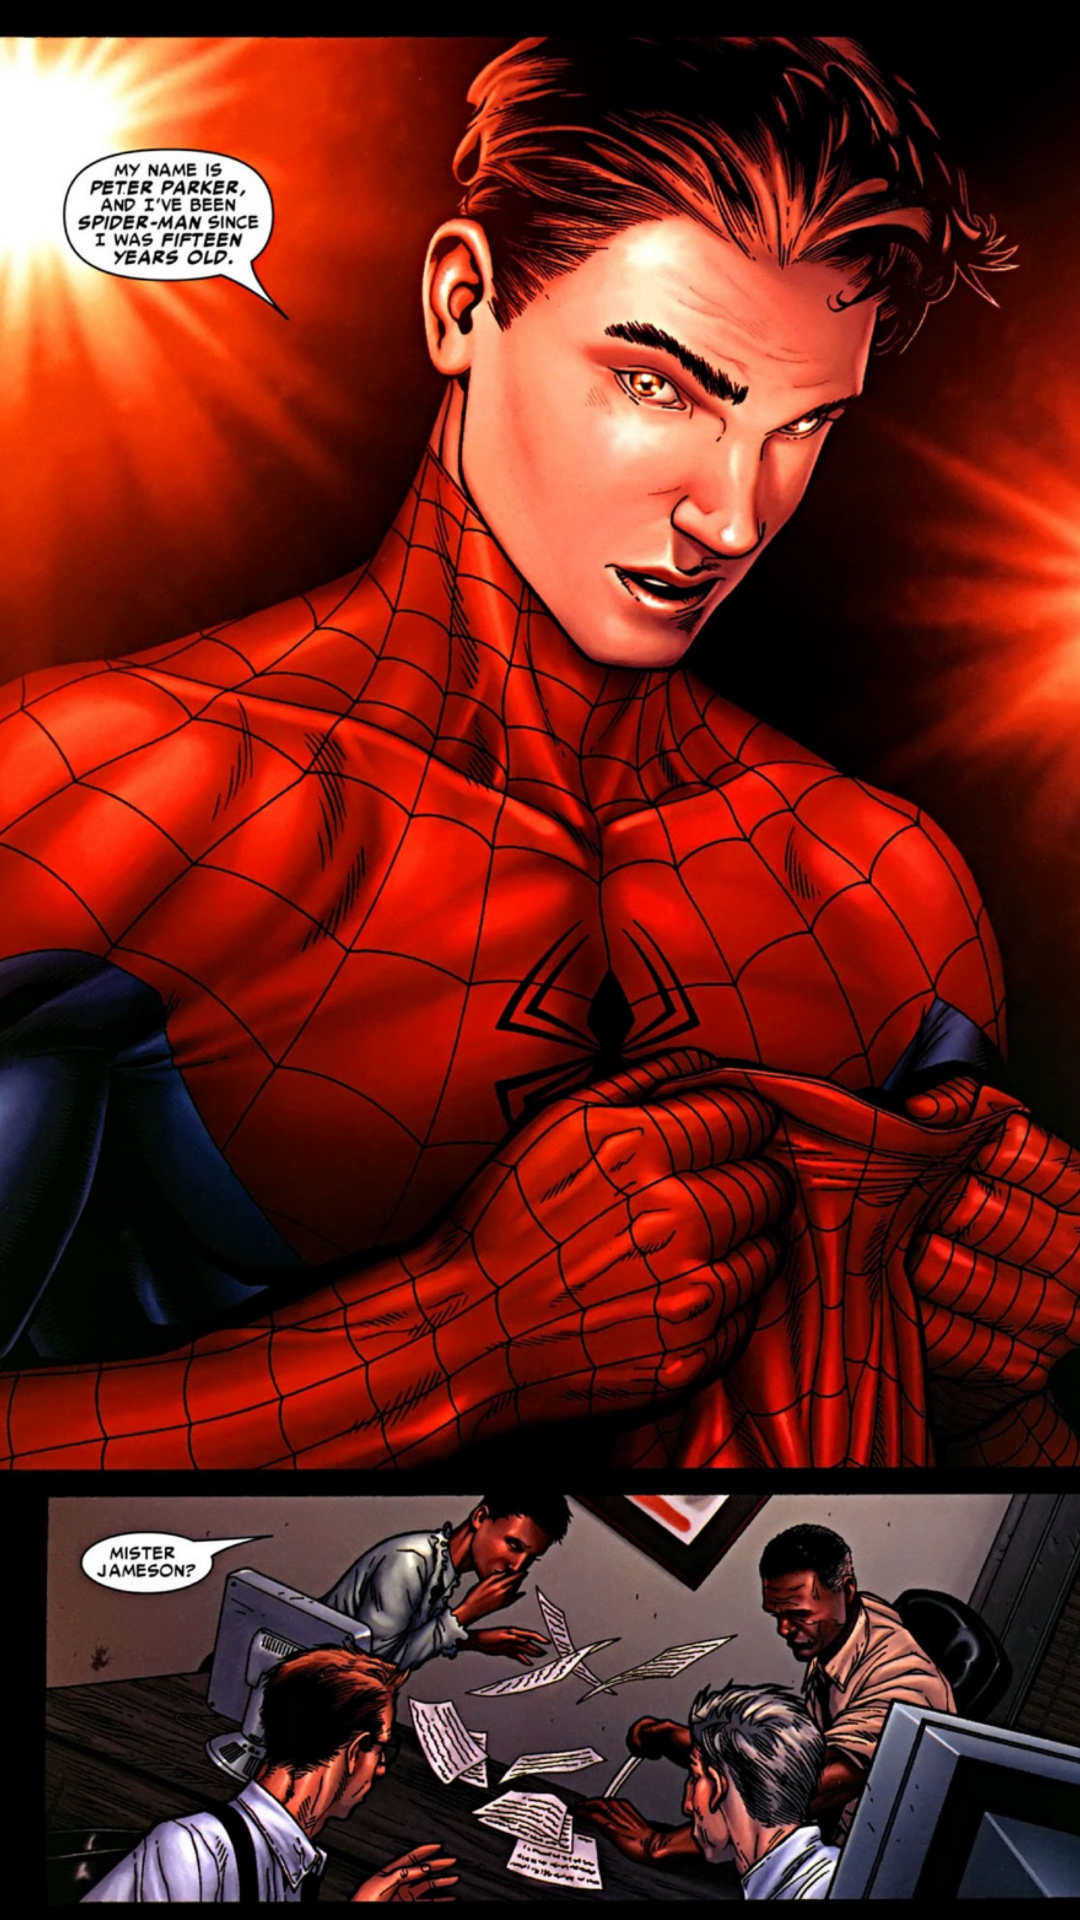 Marvel - Spider Man in Civil War Galaxy S5 Wallpaper (1080x1920)